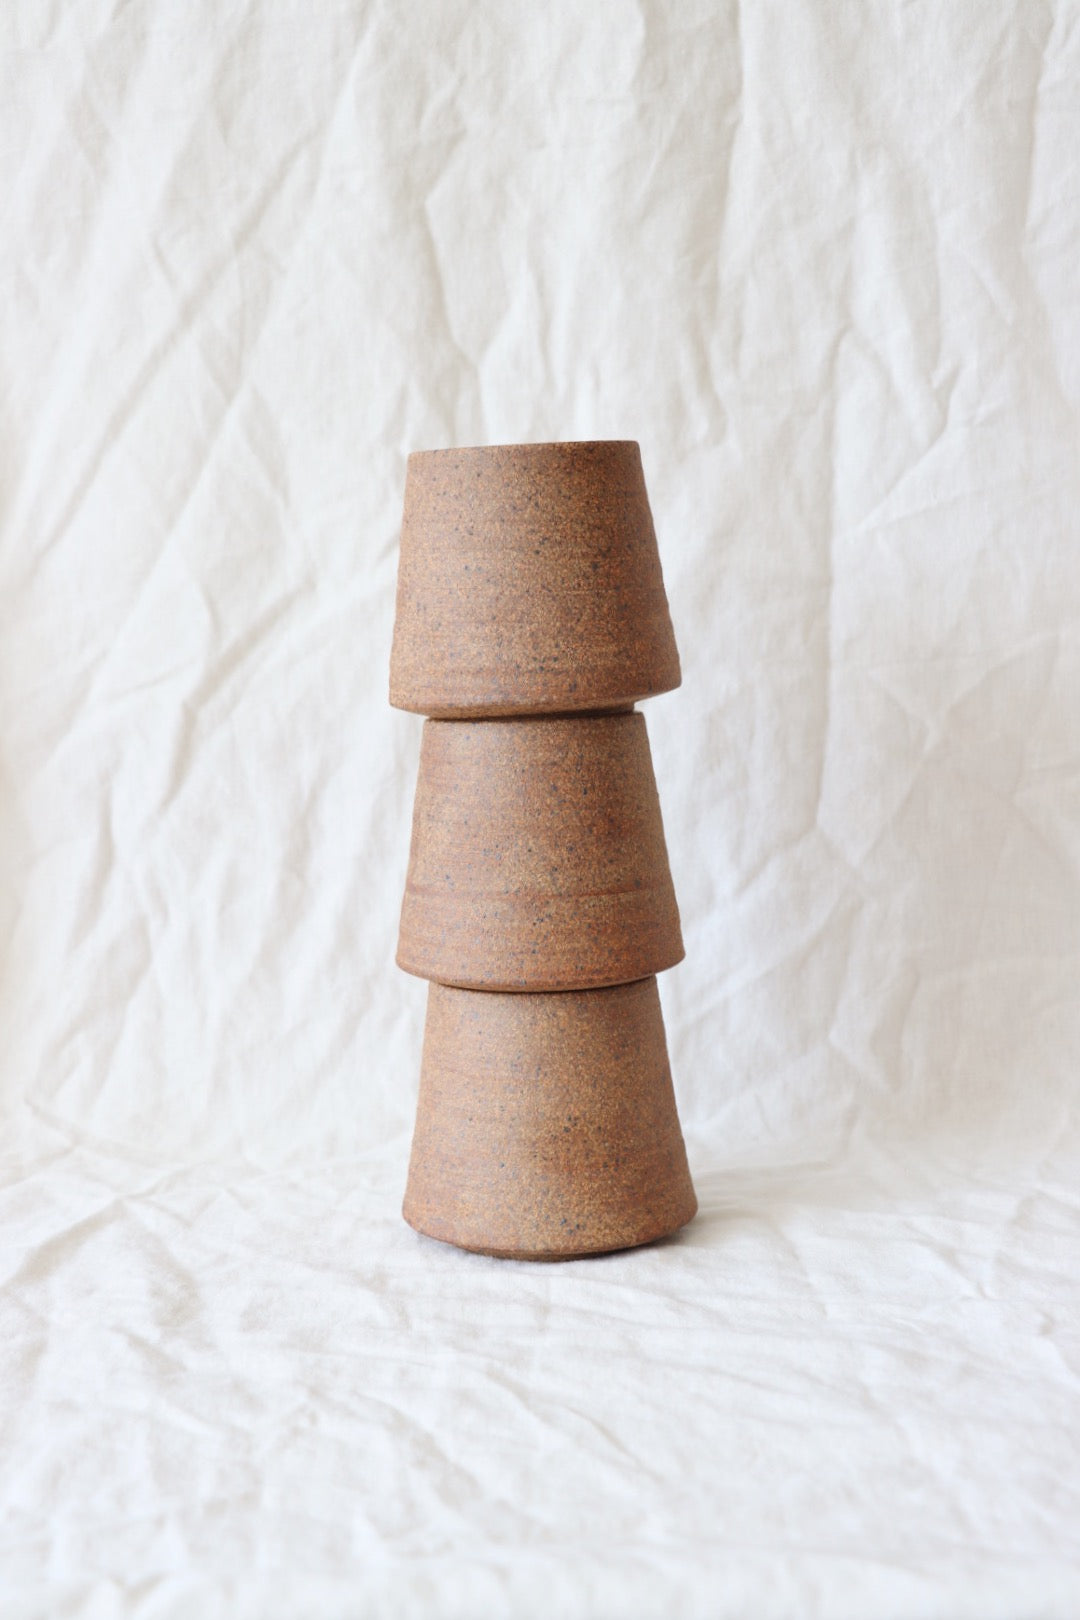 Sandstone Spiral Cup